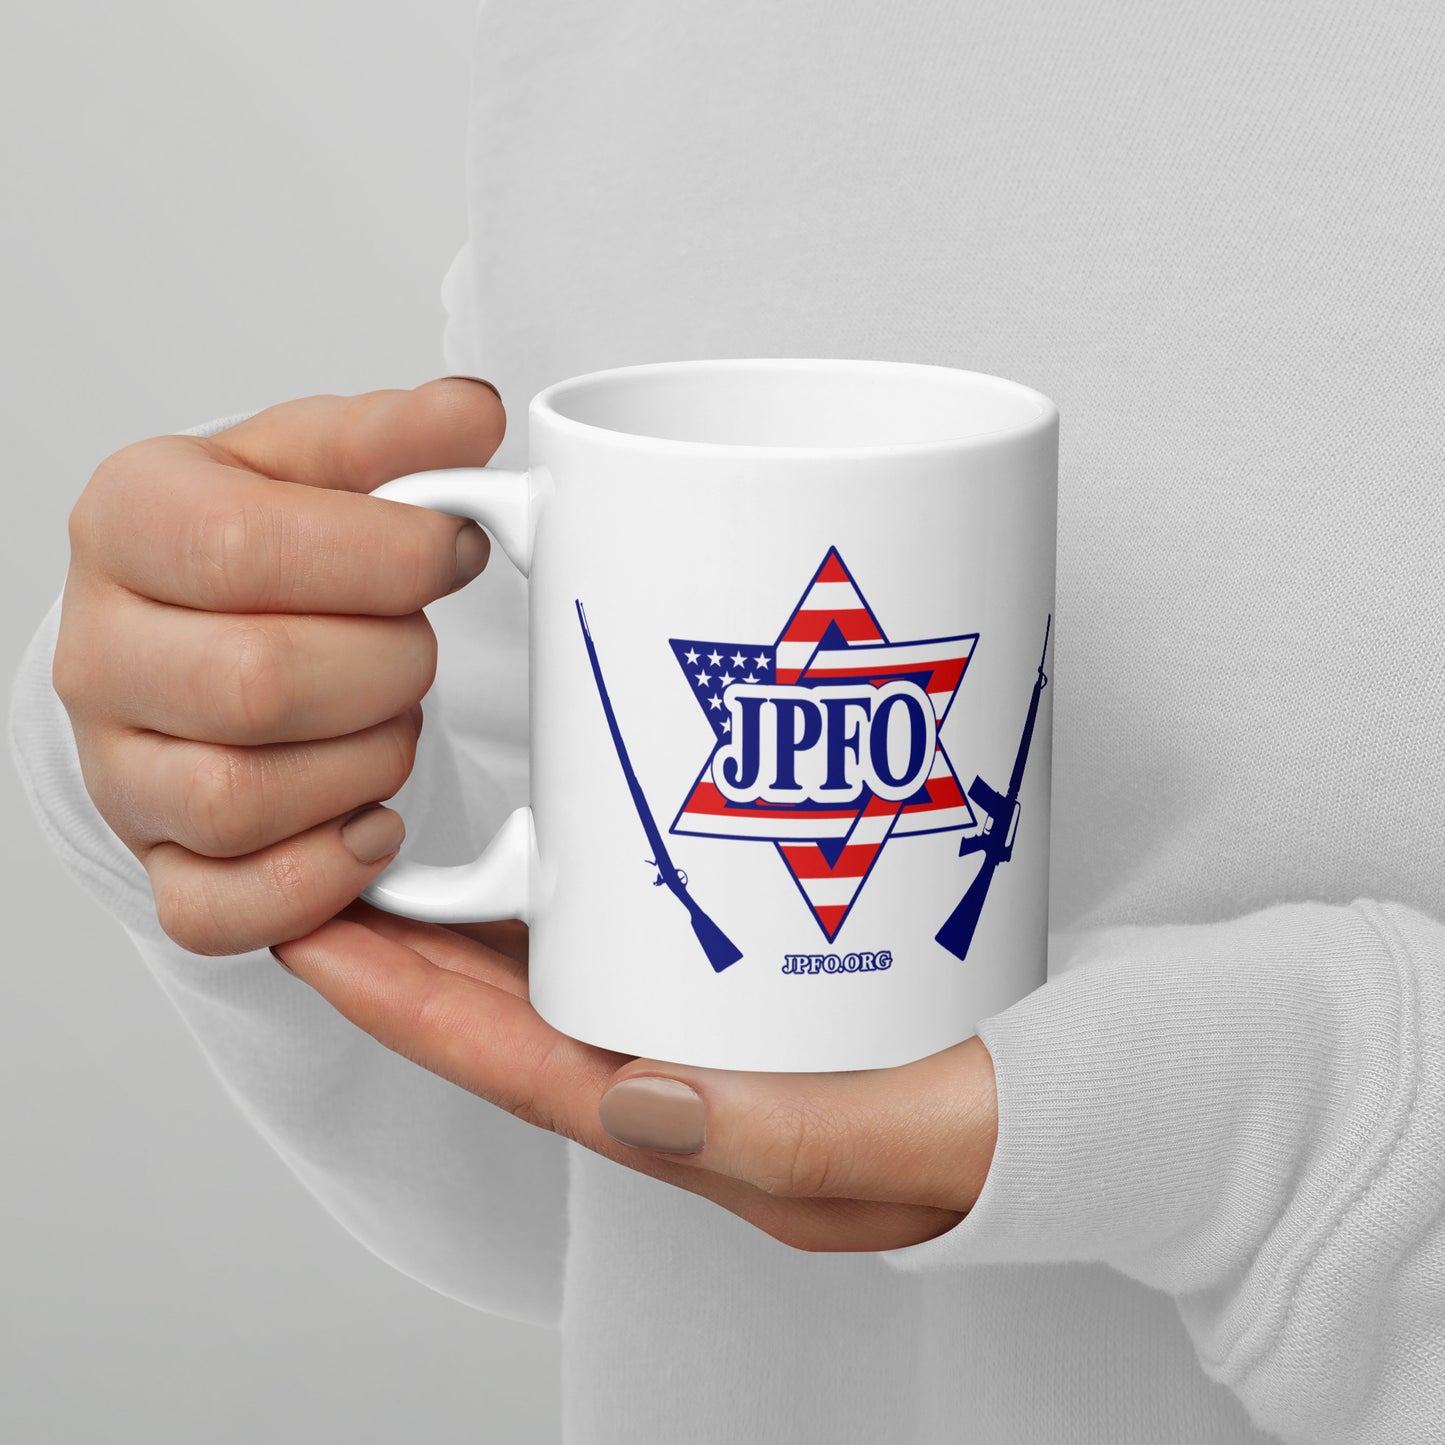 White Glossy Mug With JPFO Logo